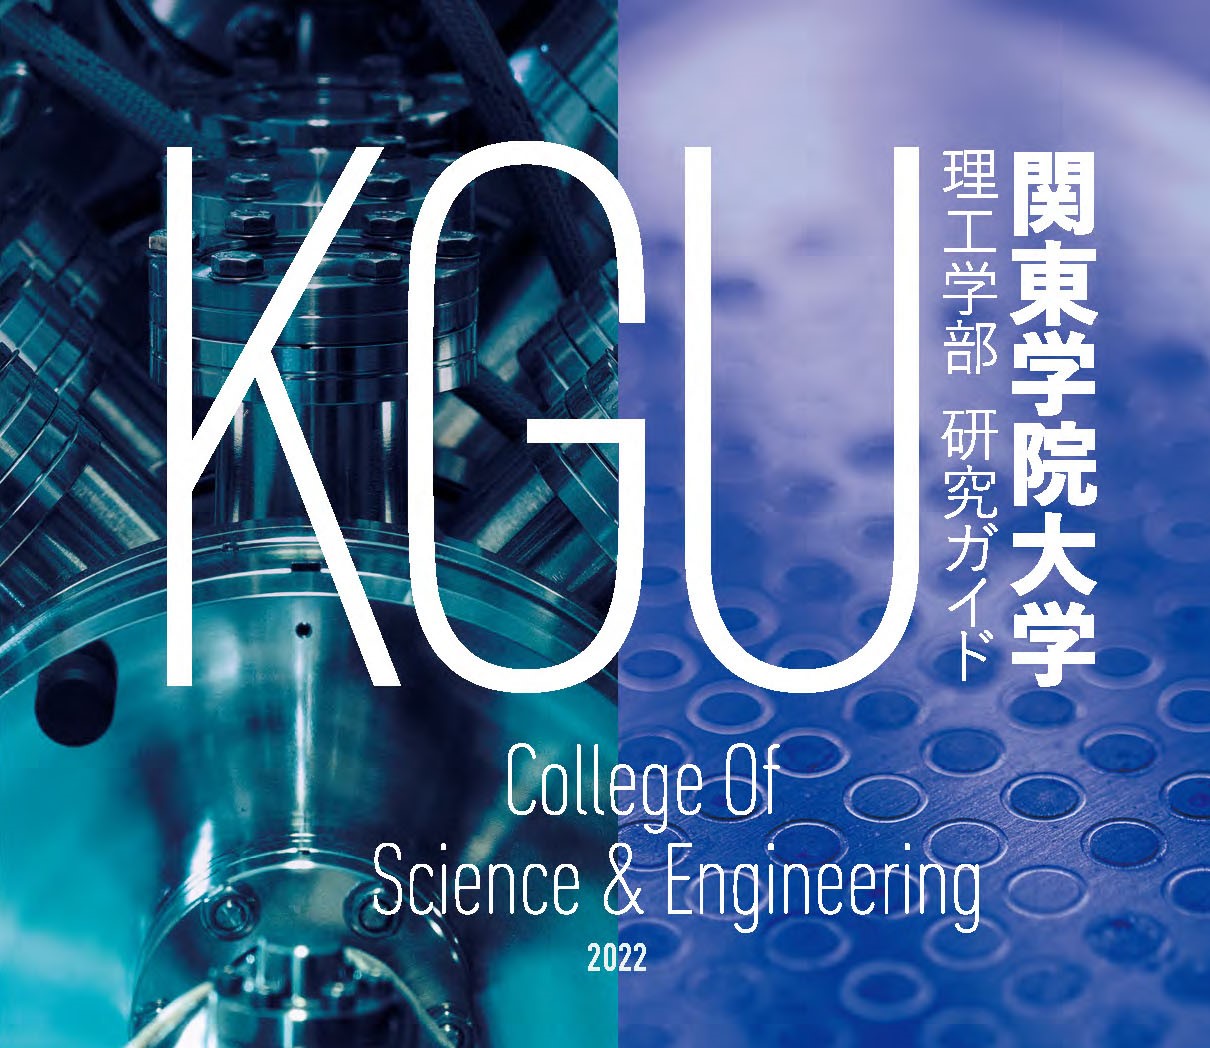 College_of_Science_Engineering_2022 - コピー